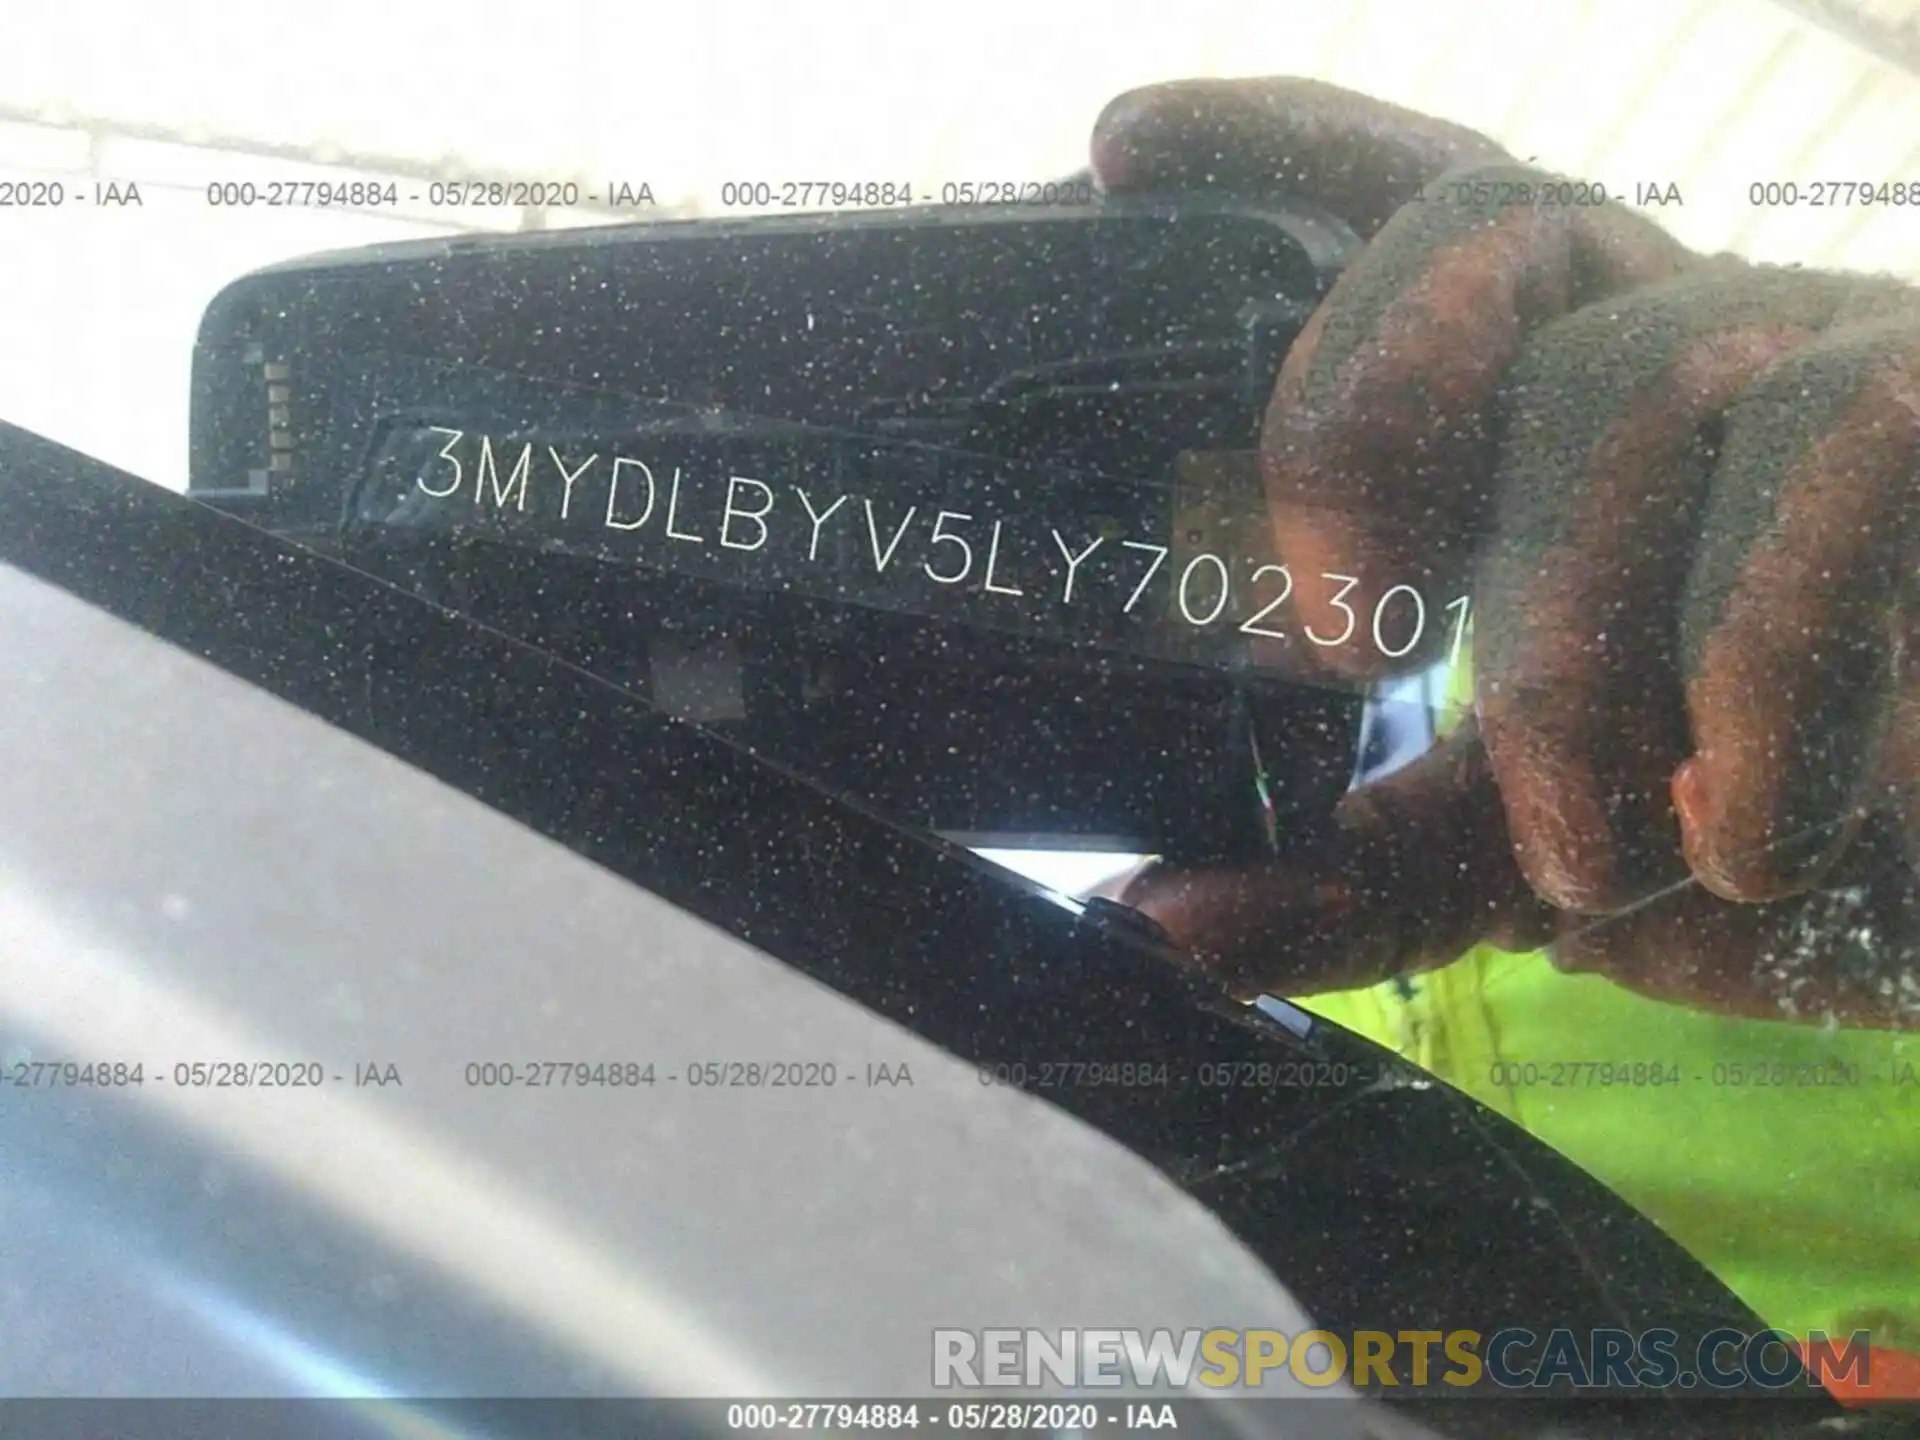 9 Photograph of a damaged car 3MYDLBYV5LY702301 TOYOTA YARIS 2020